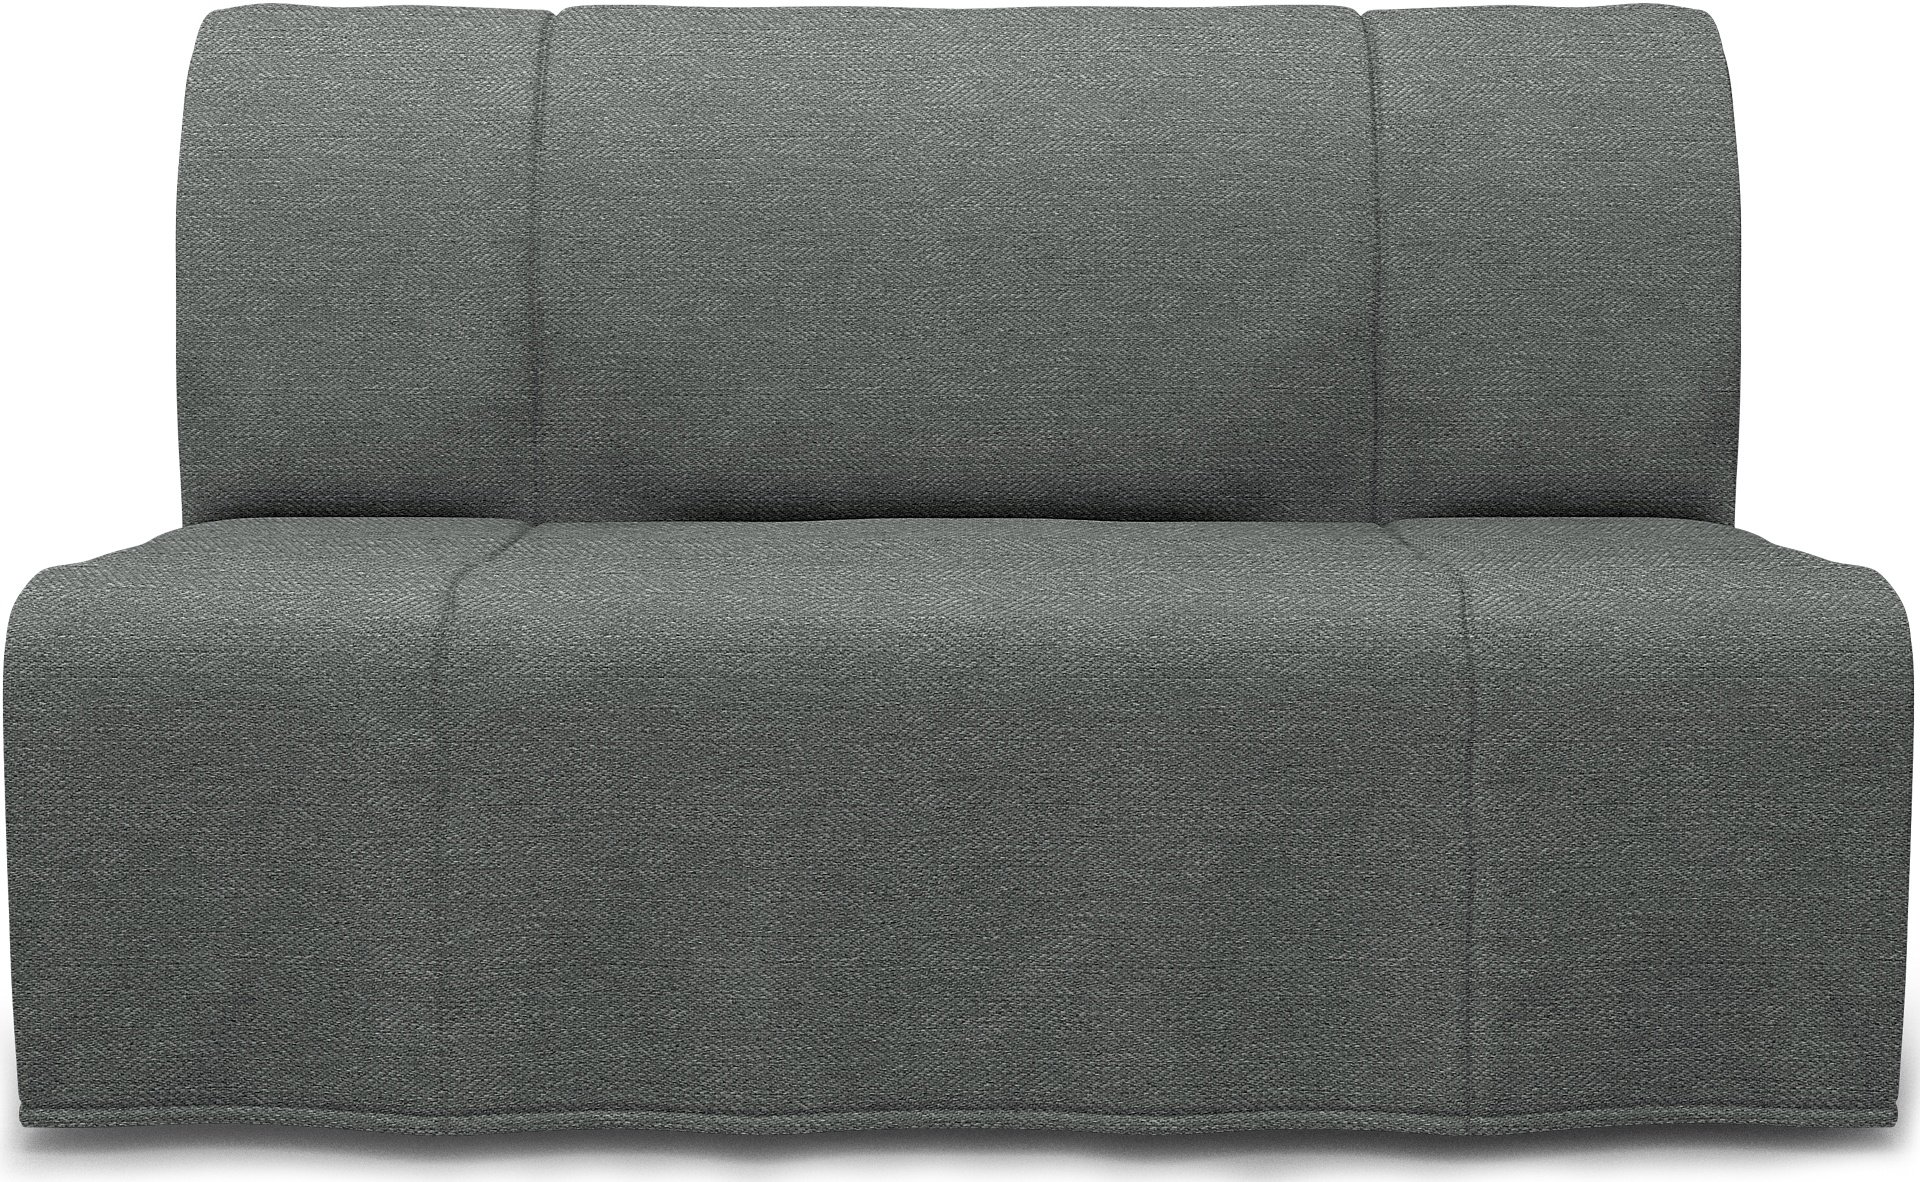 IKEA - Lycksele 2 Seater Bedsofa, Laurel, Boucle & Texture - Bemz